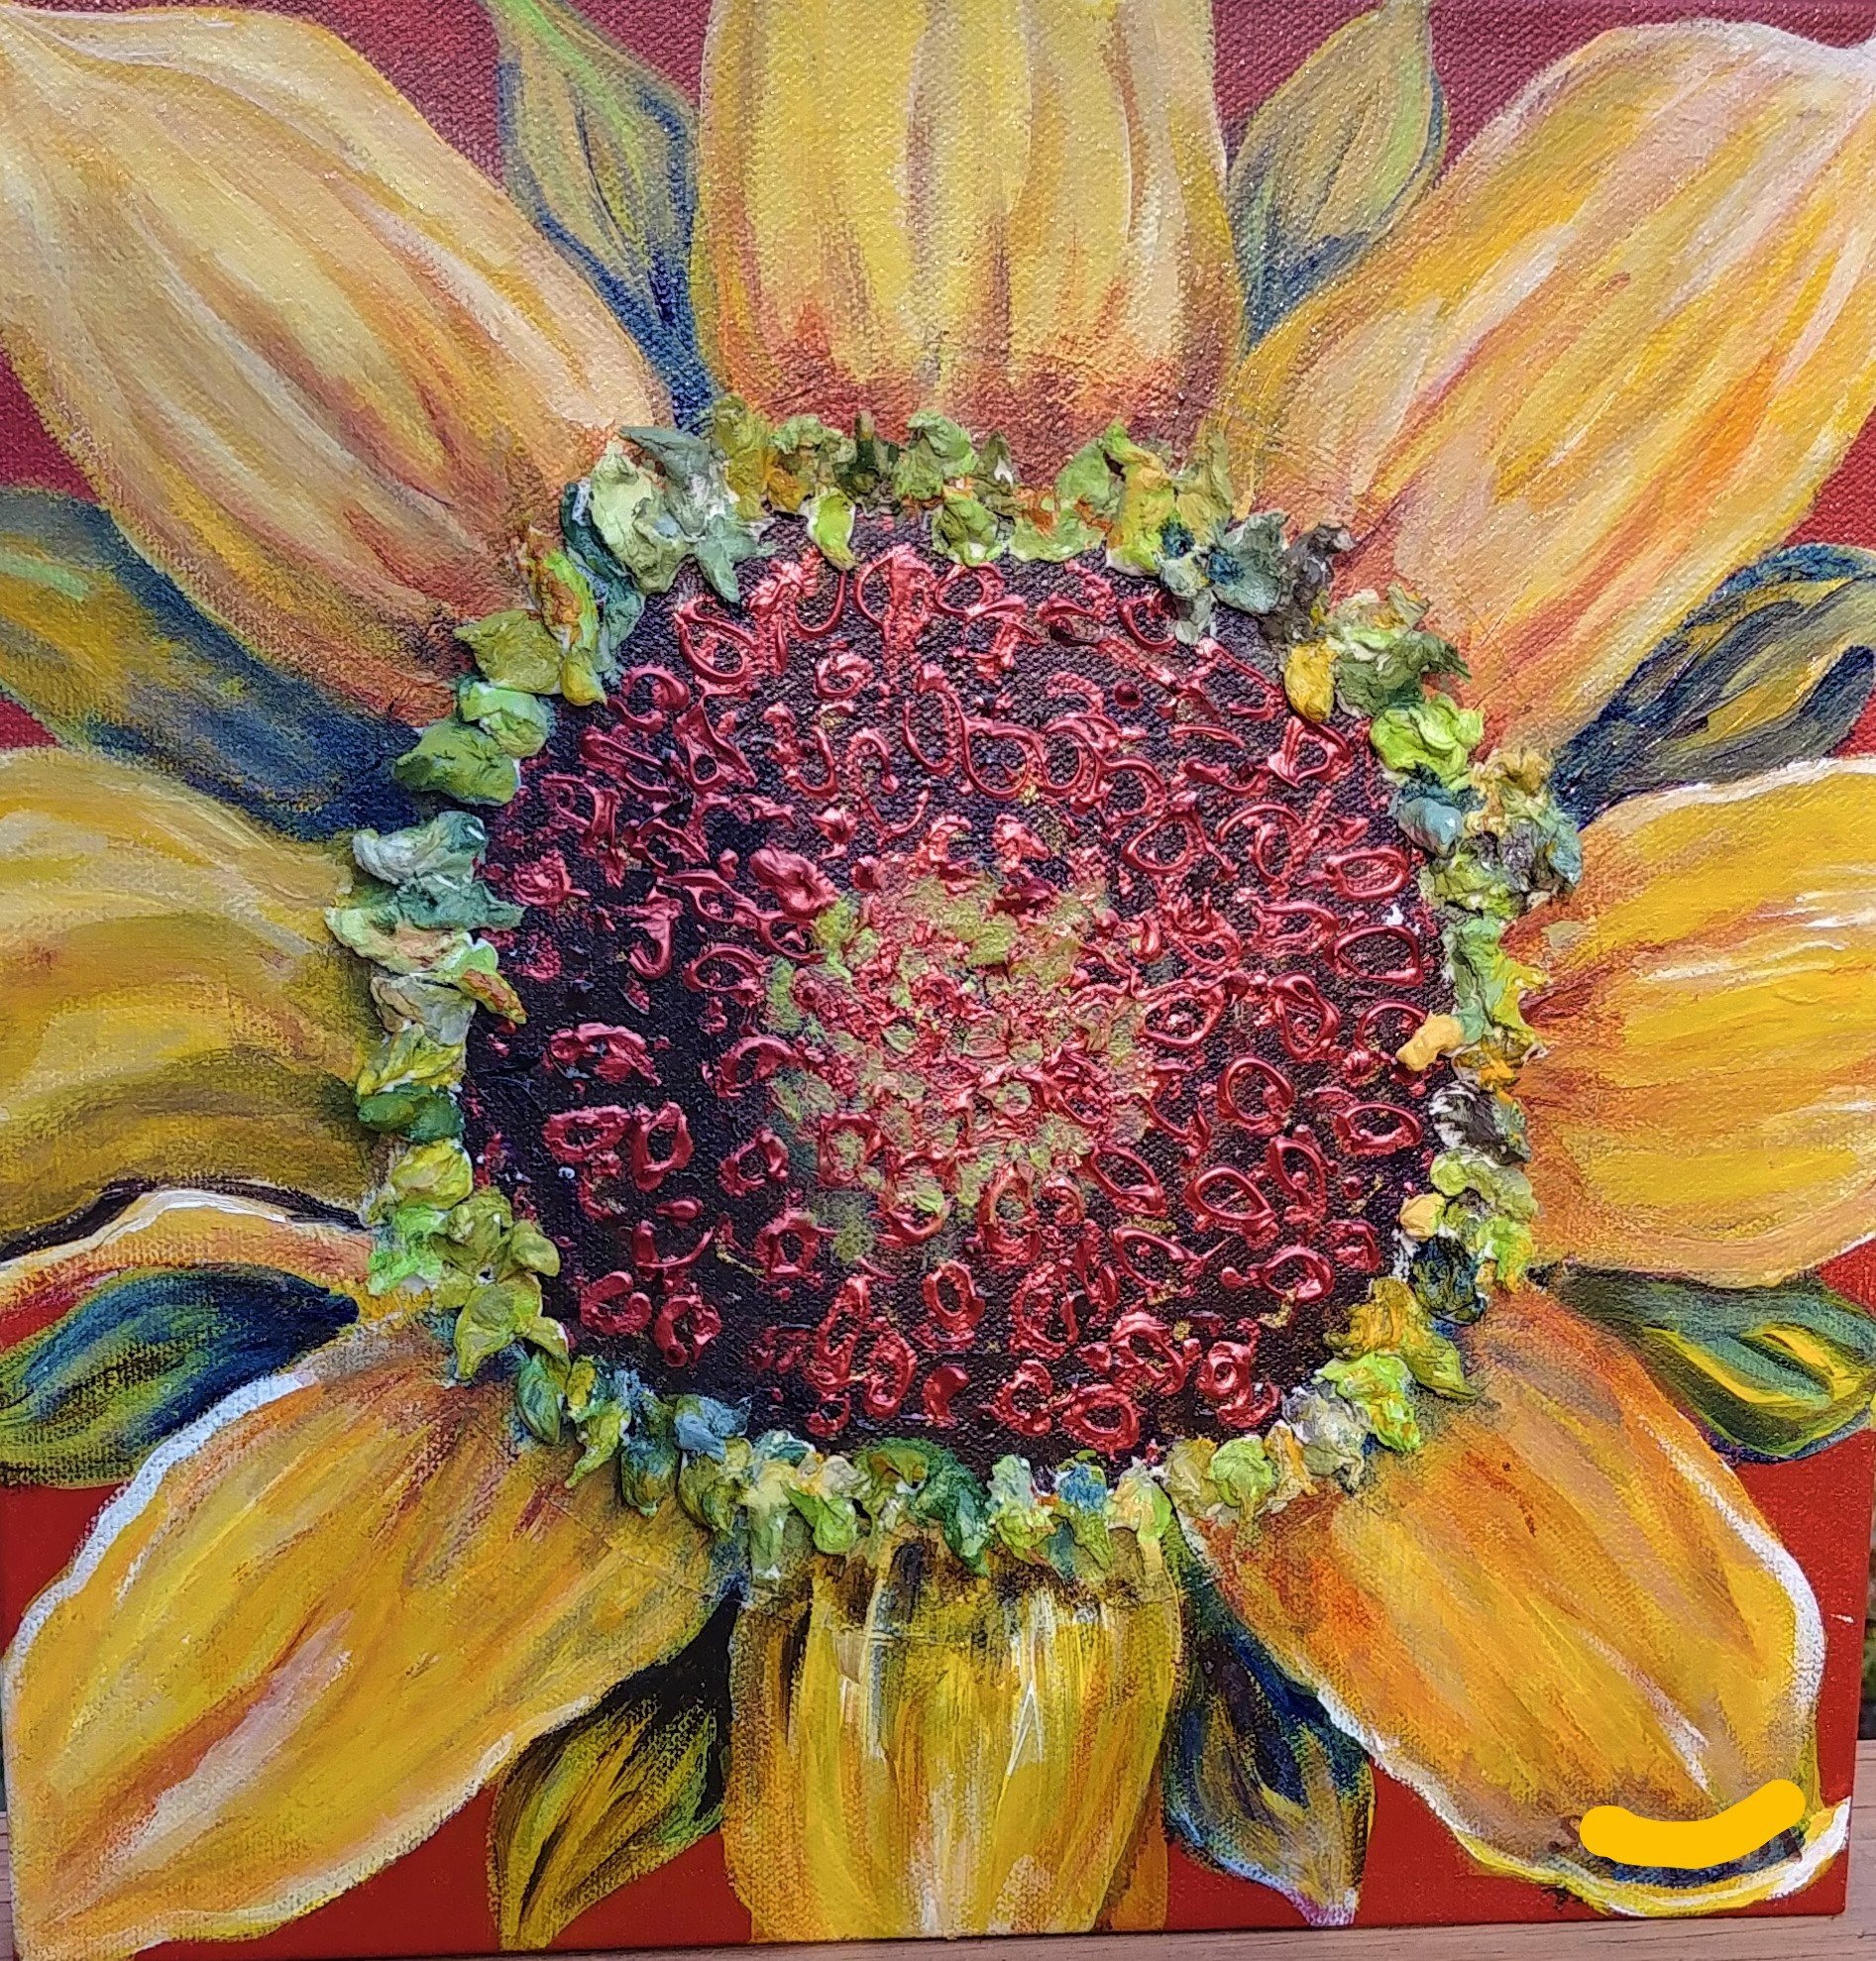 Sunny Sunflower Face Paint Tutorial